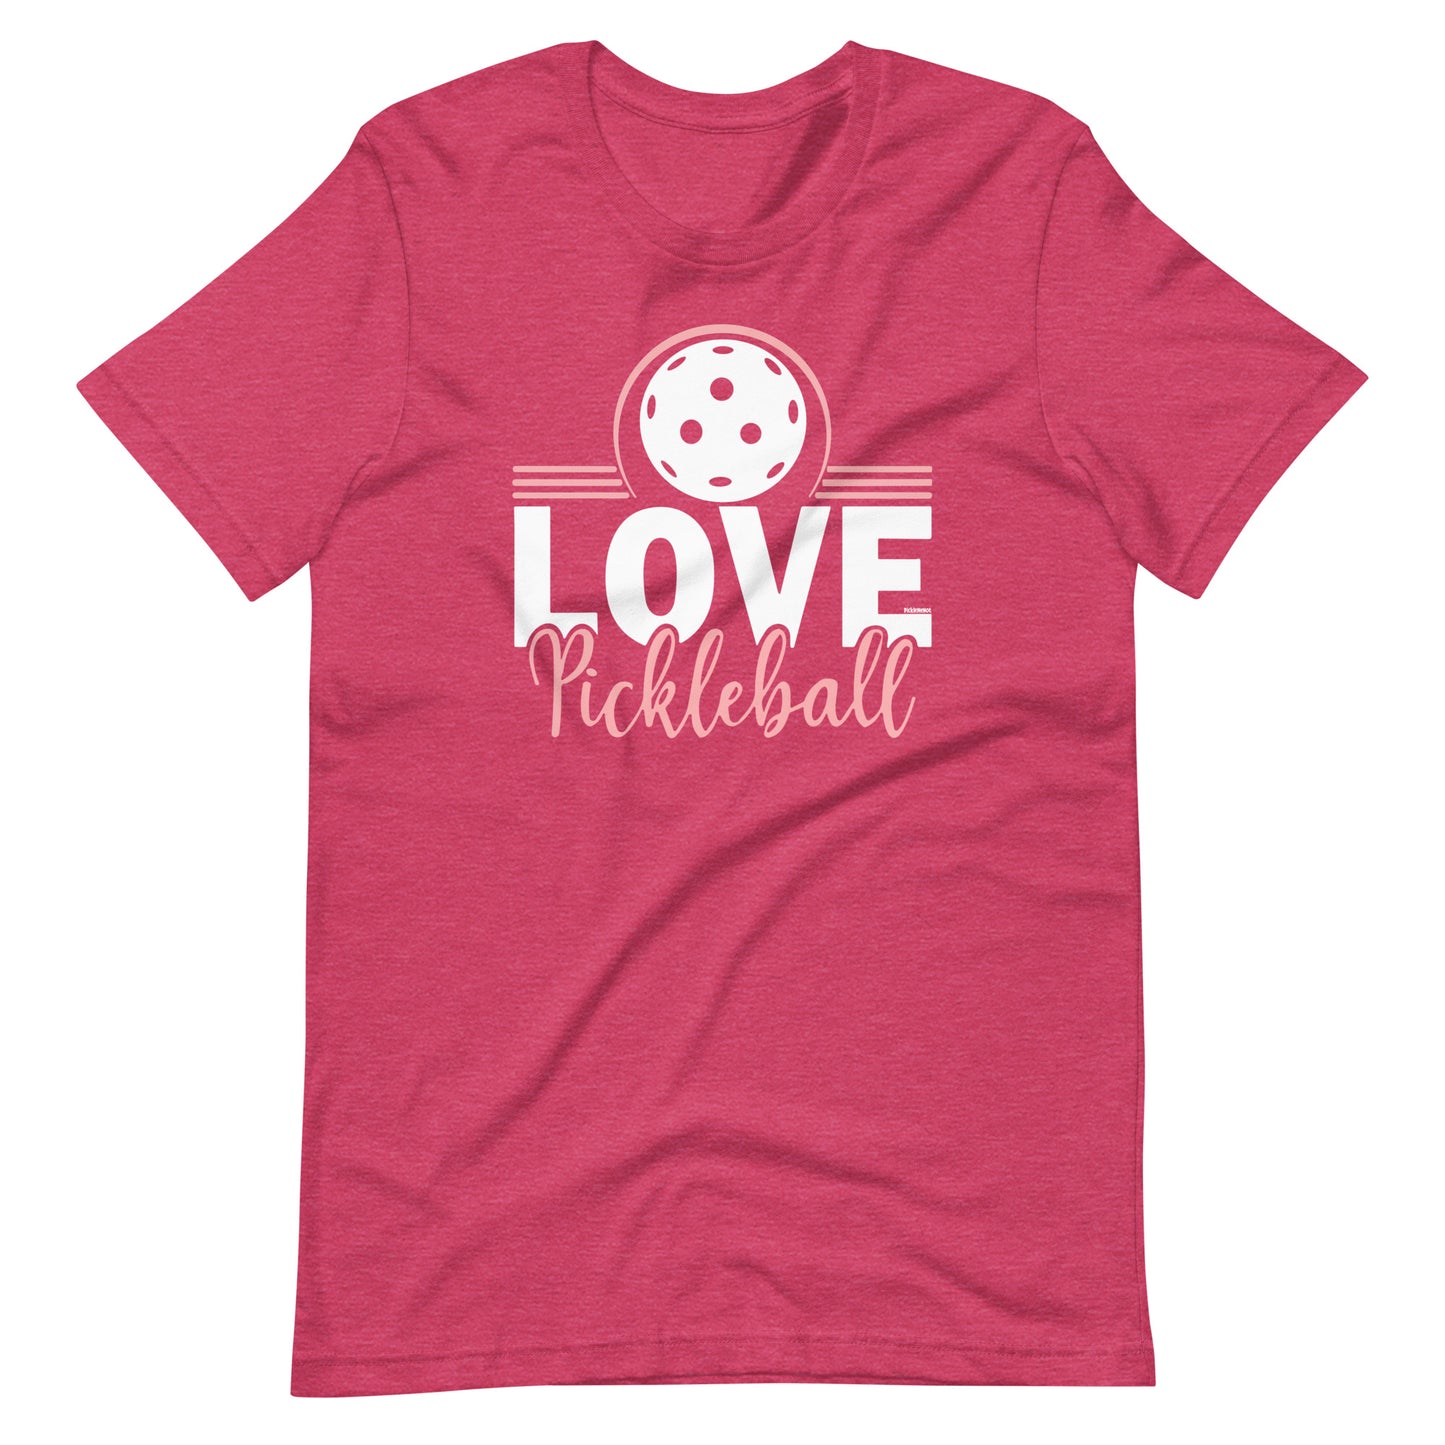 Fun Pickleball Graphic: "Love Pickleball," Womens Heather Raspberry Unisex T-Shirt